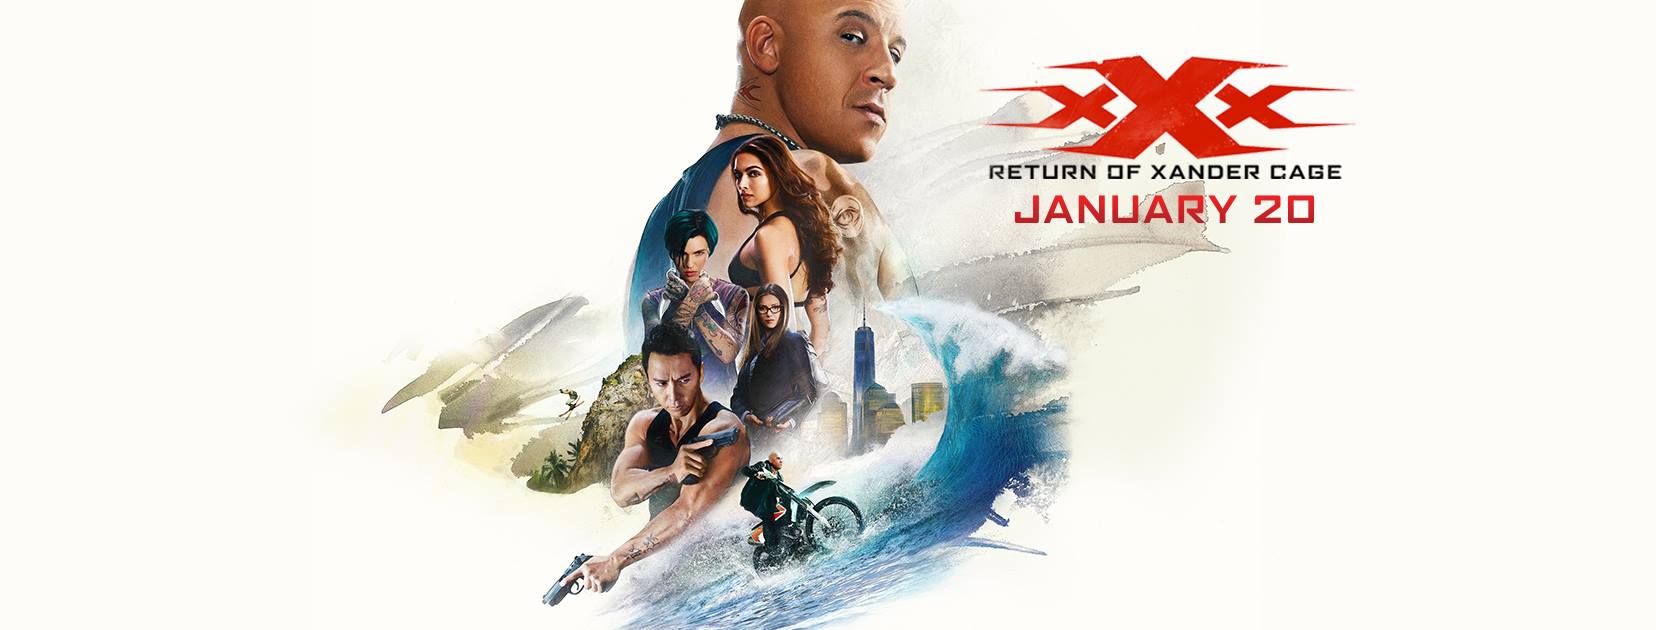 xXx Return of Xander Cage 4K 2017 big poster